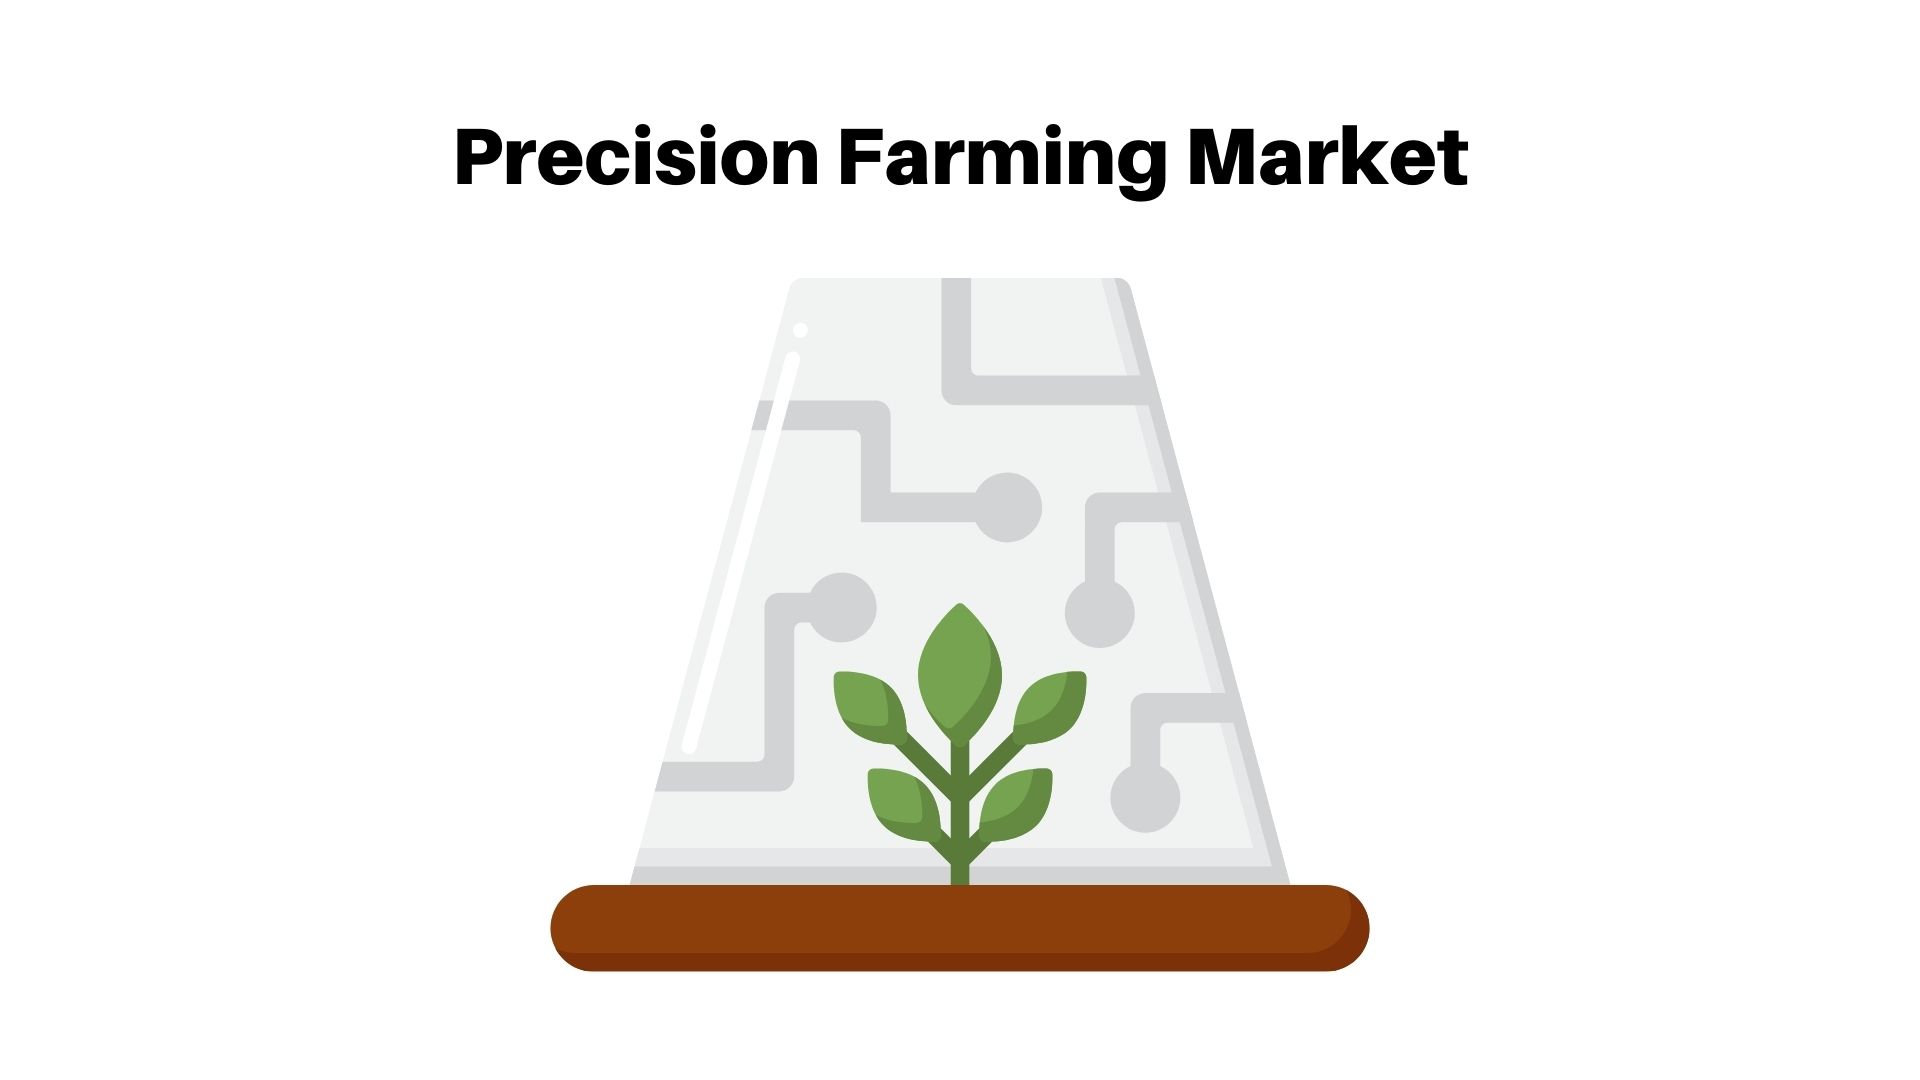 Precision Farming Market Is Encouraged to Reach USD 24.53 Billion by 2032